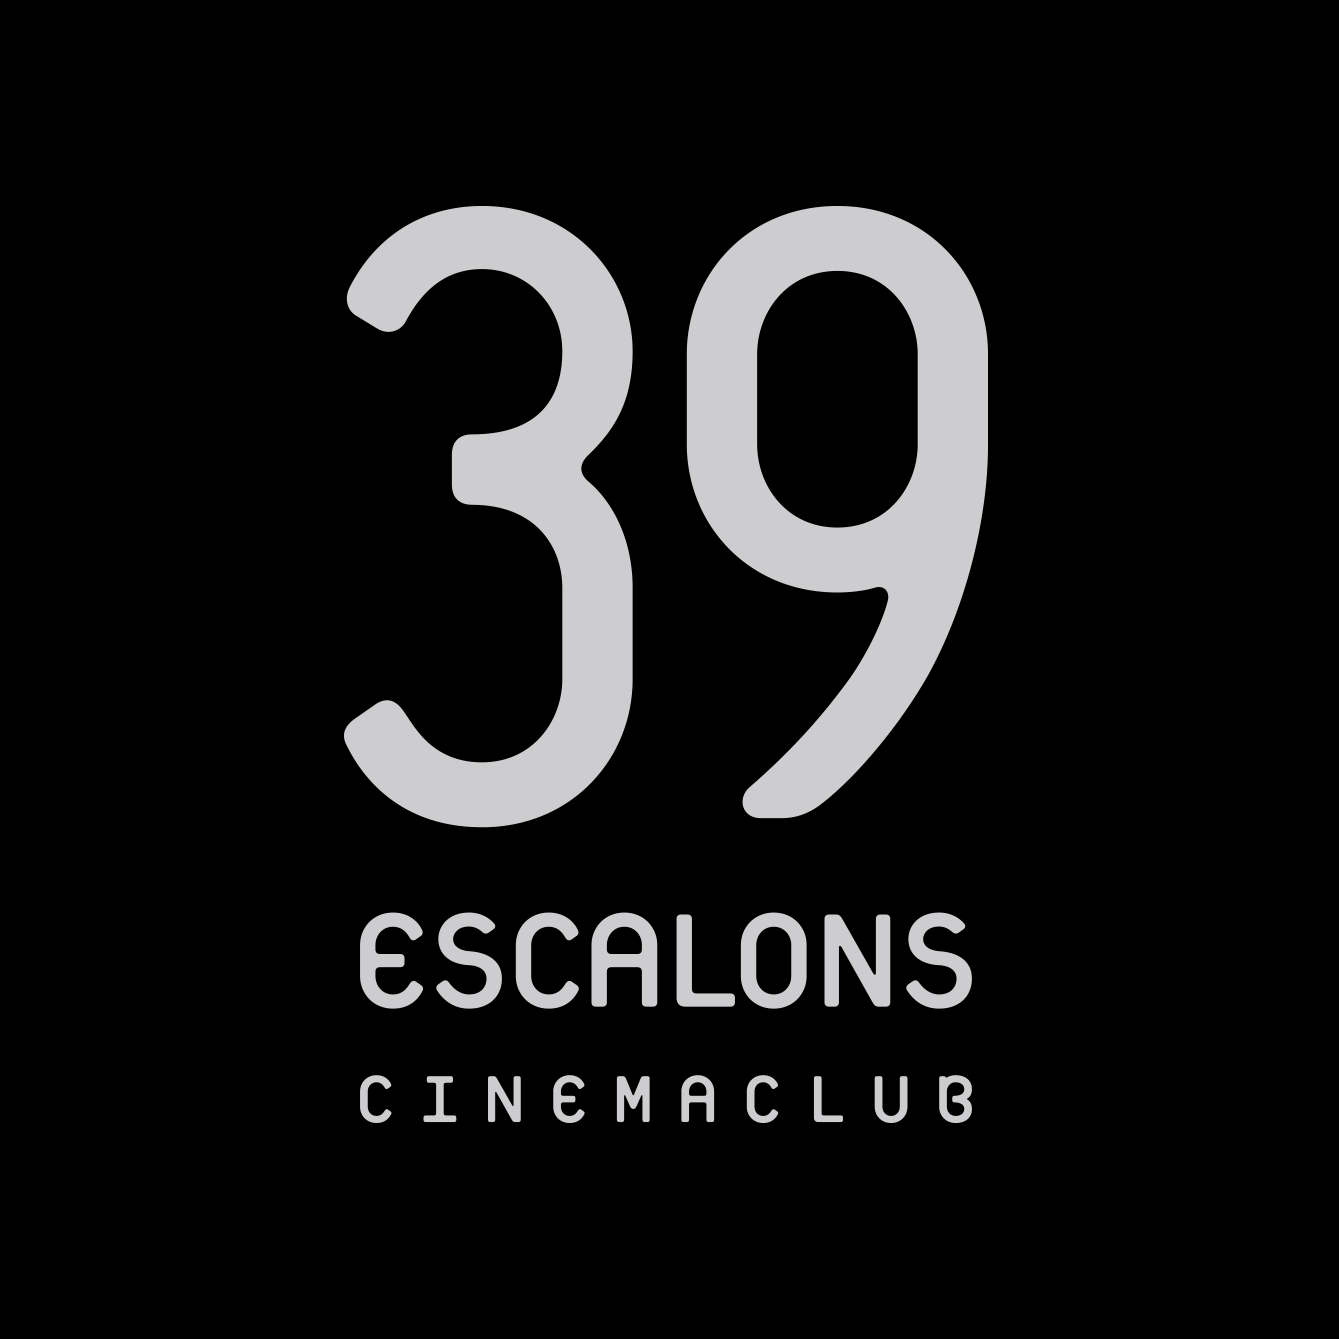 Cinema Club 39 Escalons